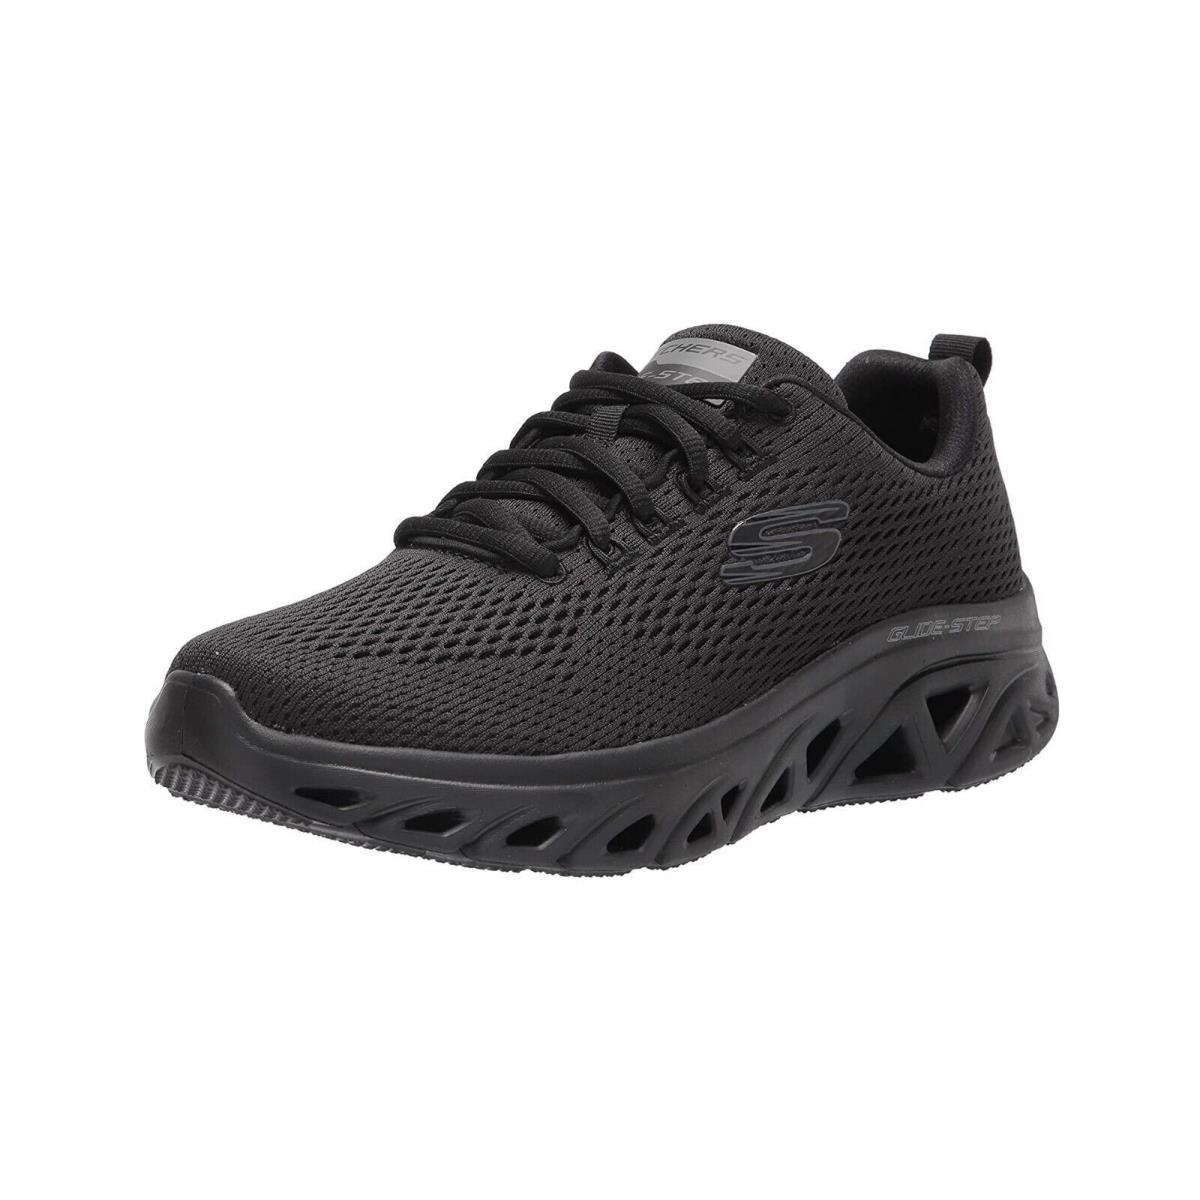 Men`s Skechers Glide Step 232135W/Black Gray Wide Fit Sneakers Shoes Size 8 - Black